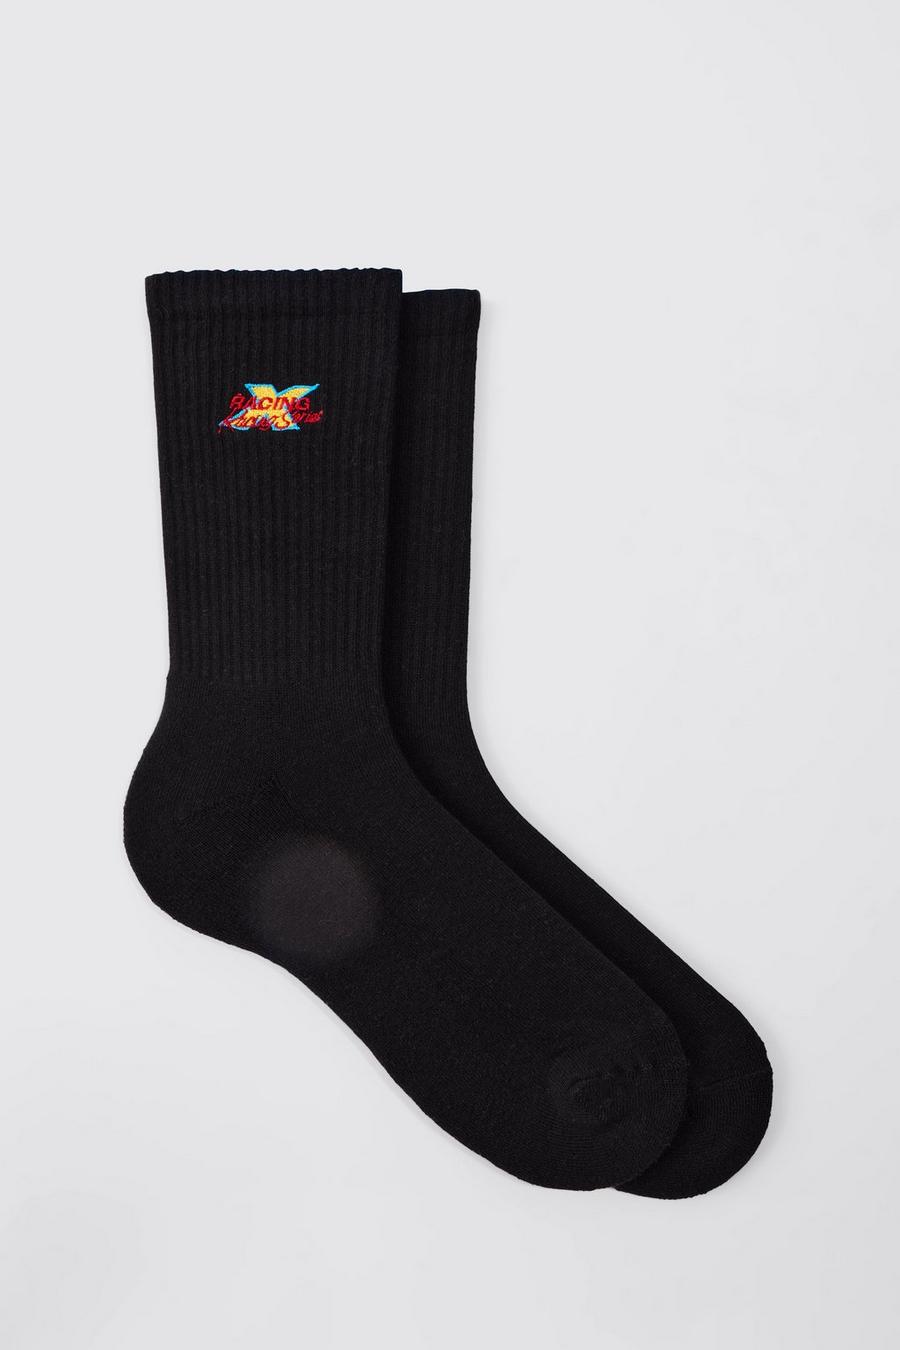 Black Moto Racing Series Embroidered Socks 